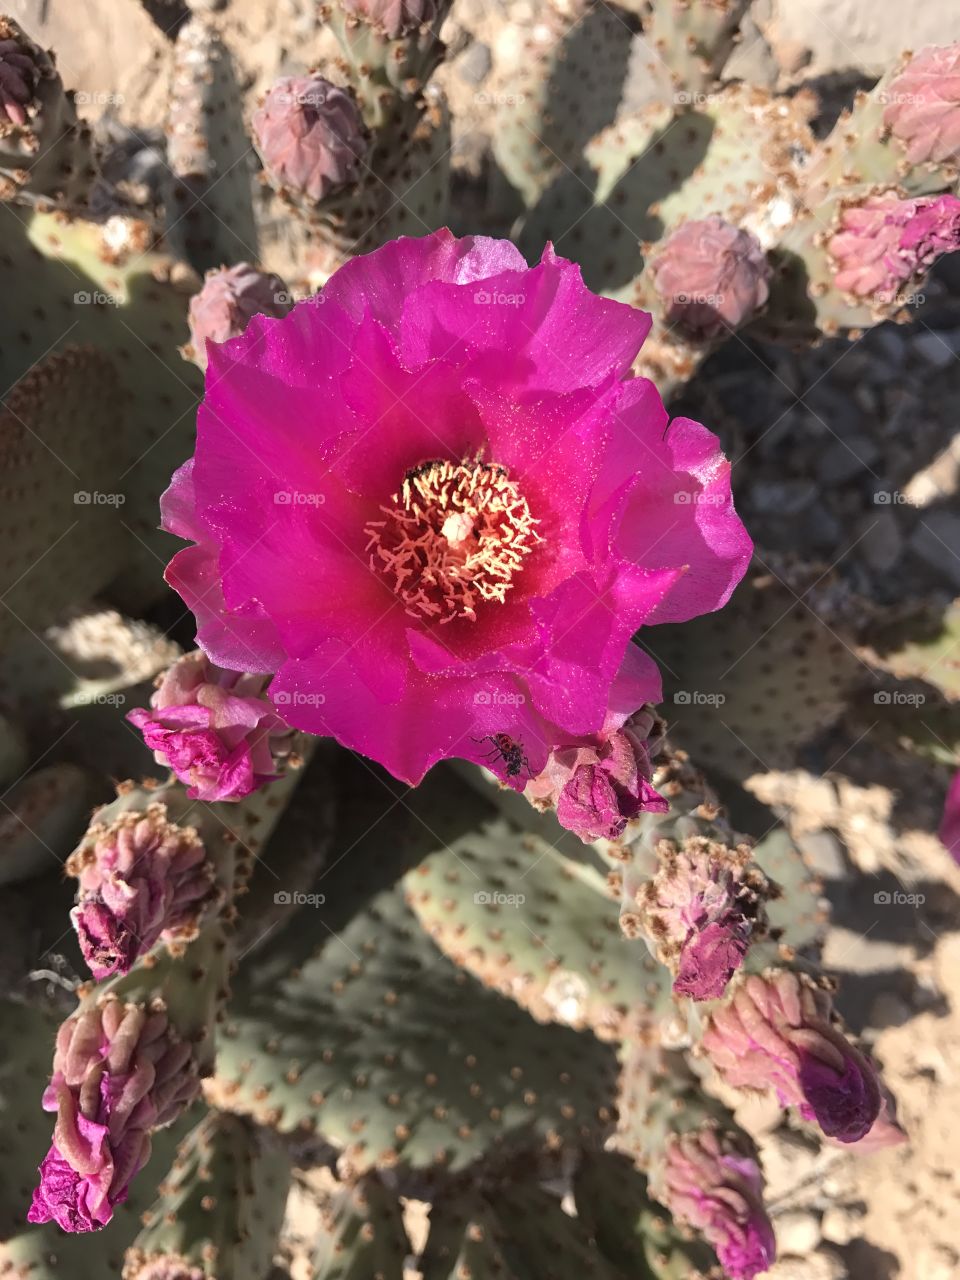 Pink Flower Cactus in the Las Vegas desert